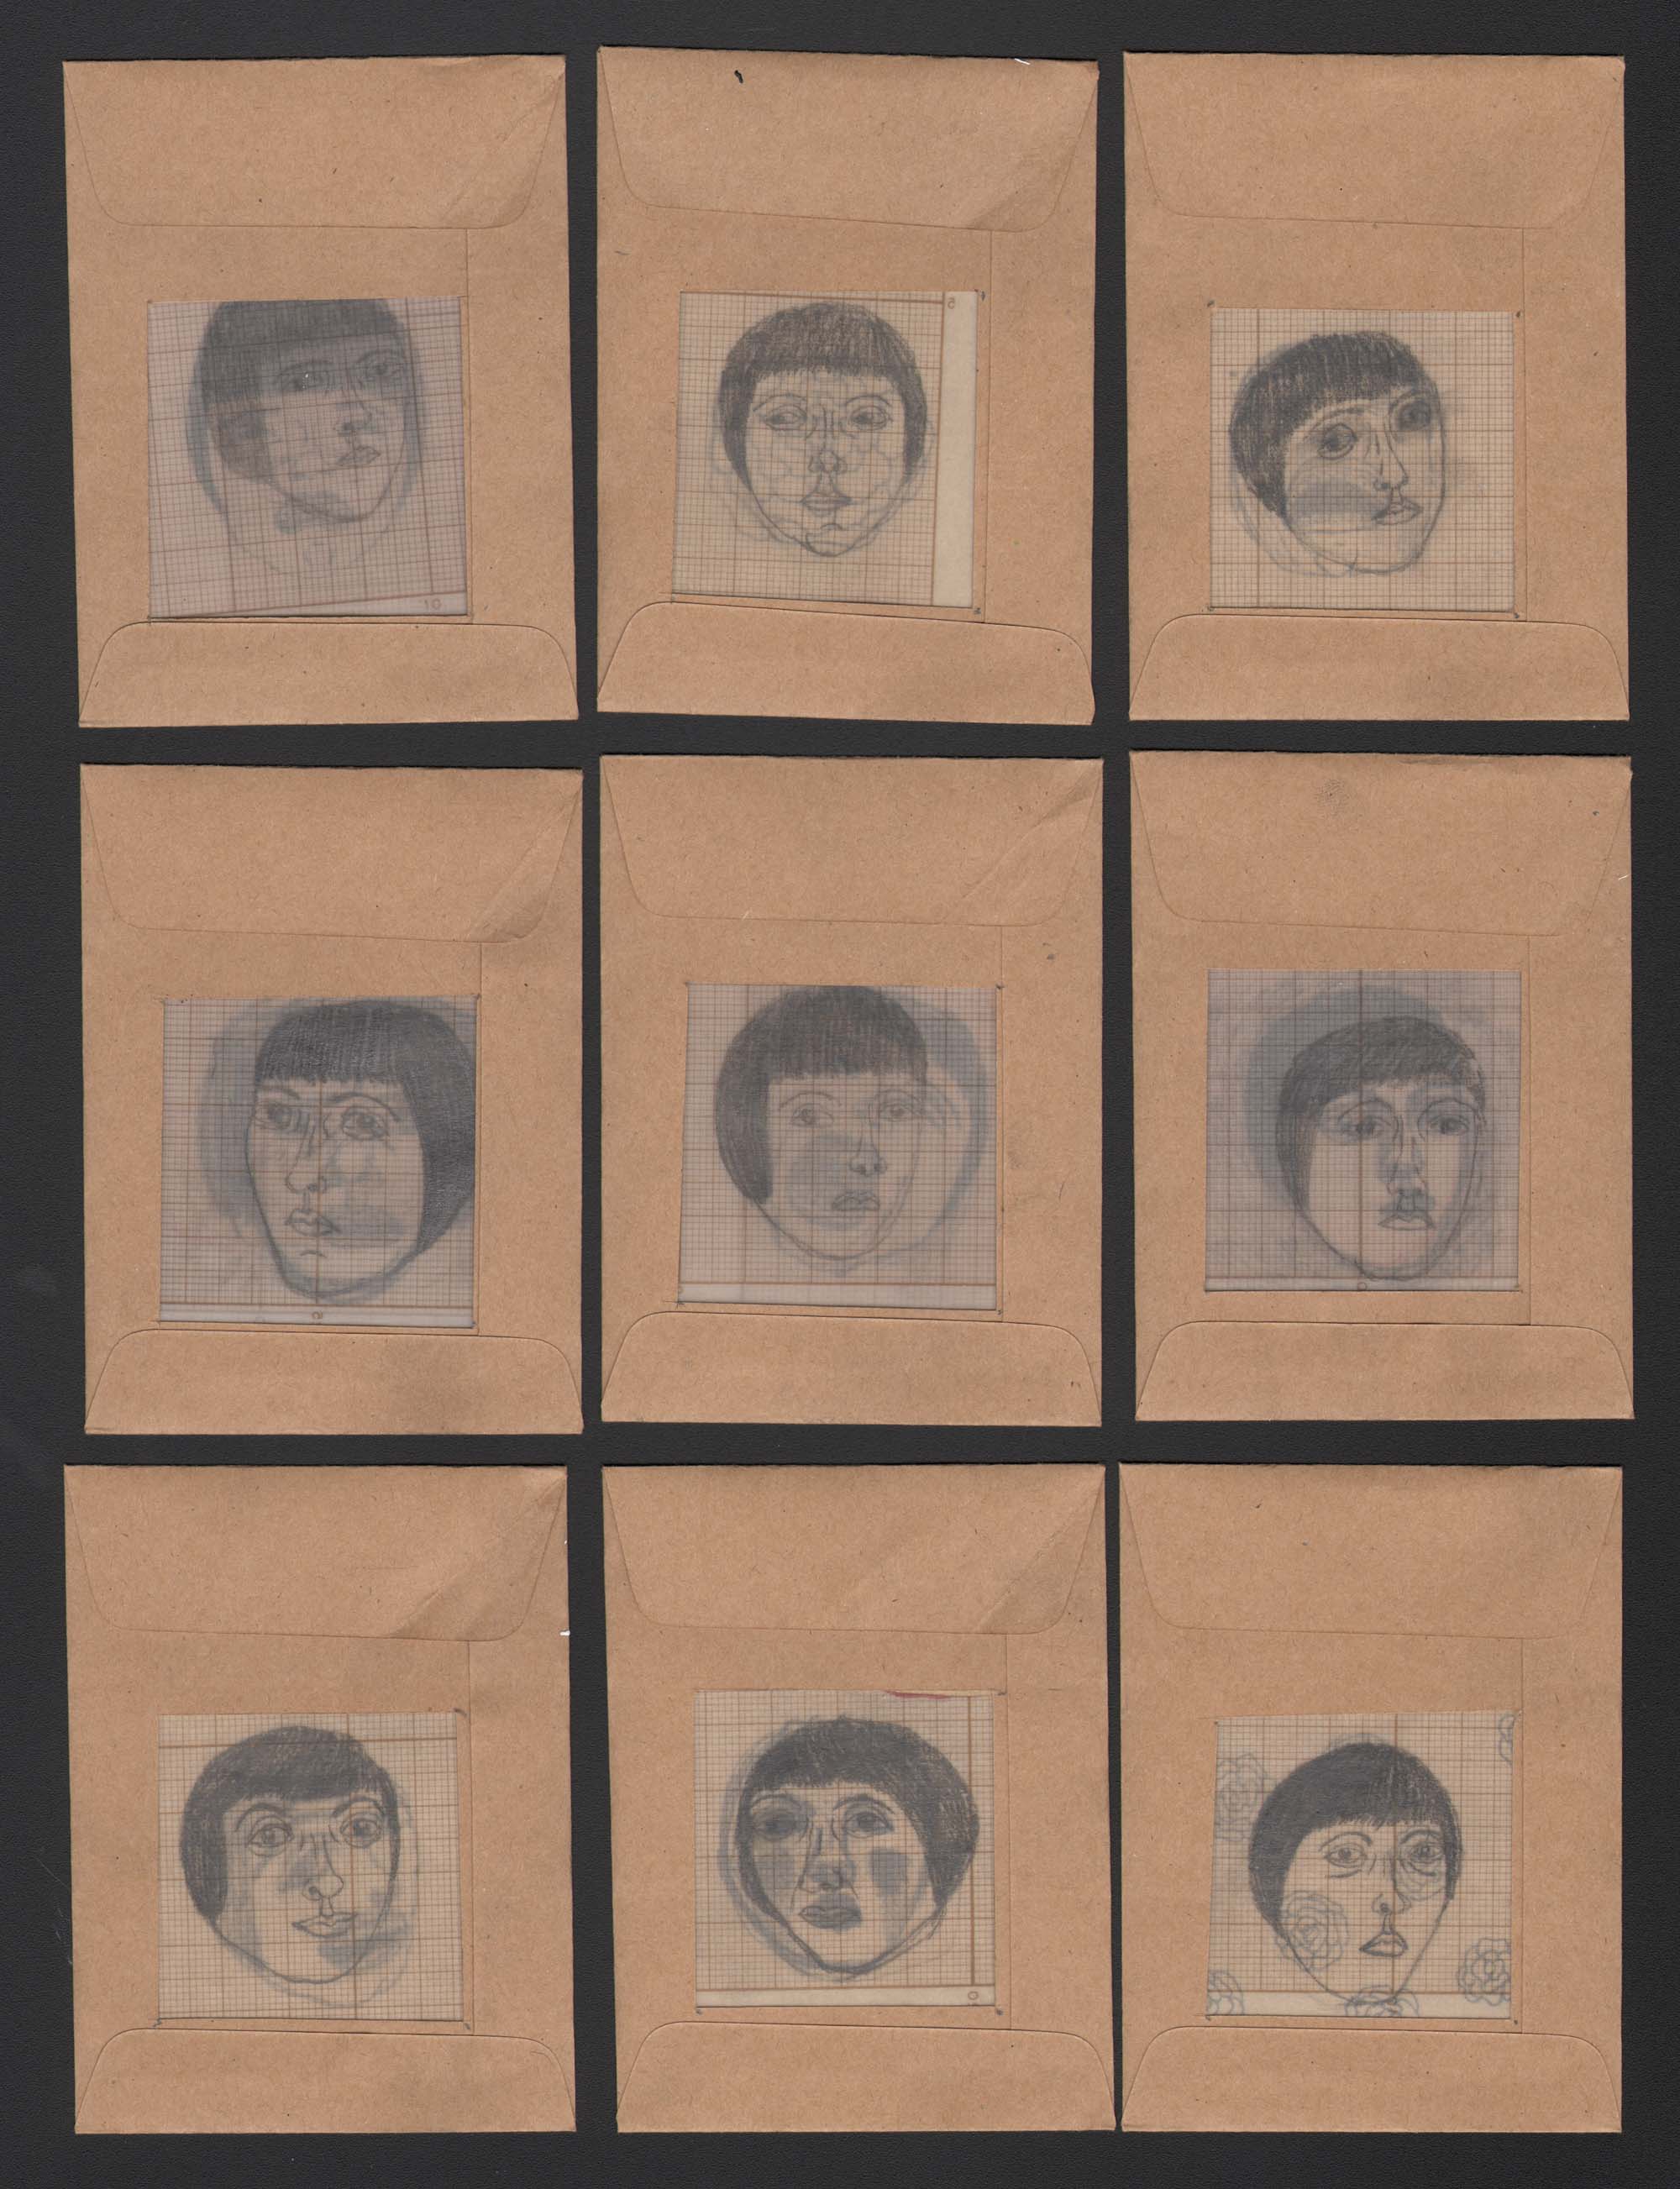 faces in envelopes